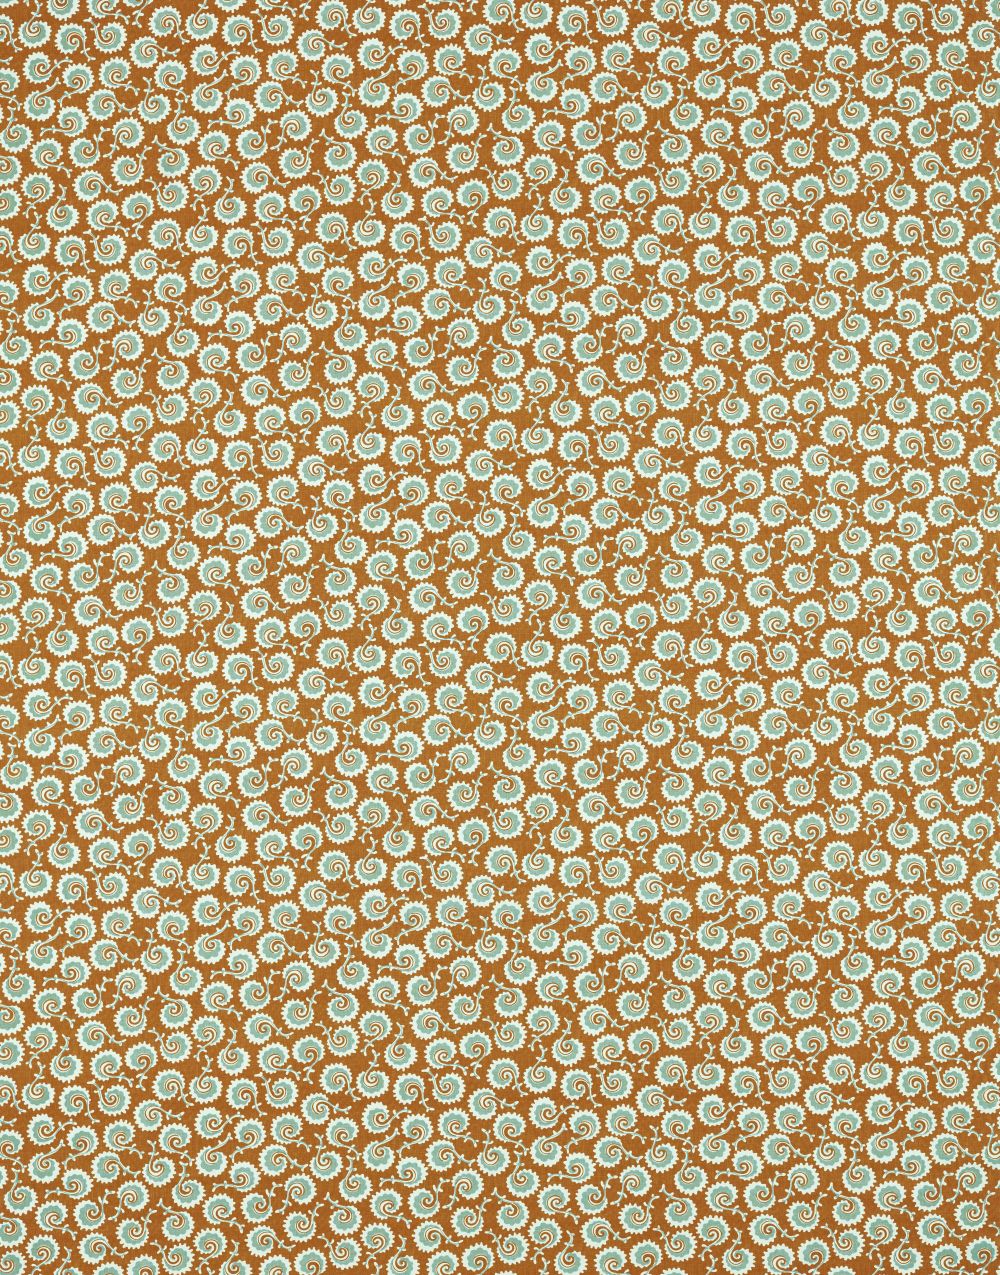 Fern Frond Fabric - Rowanberry - by Sanderson